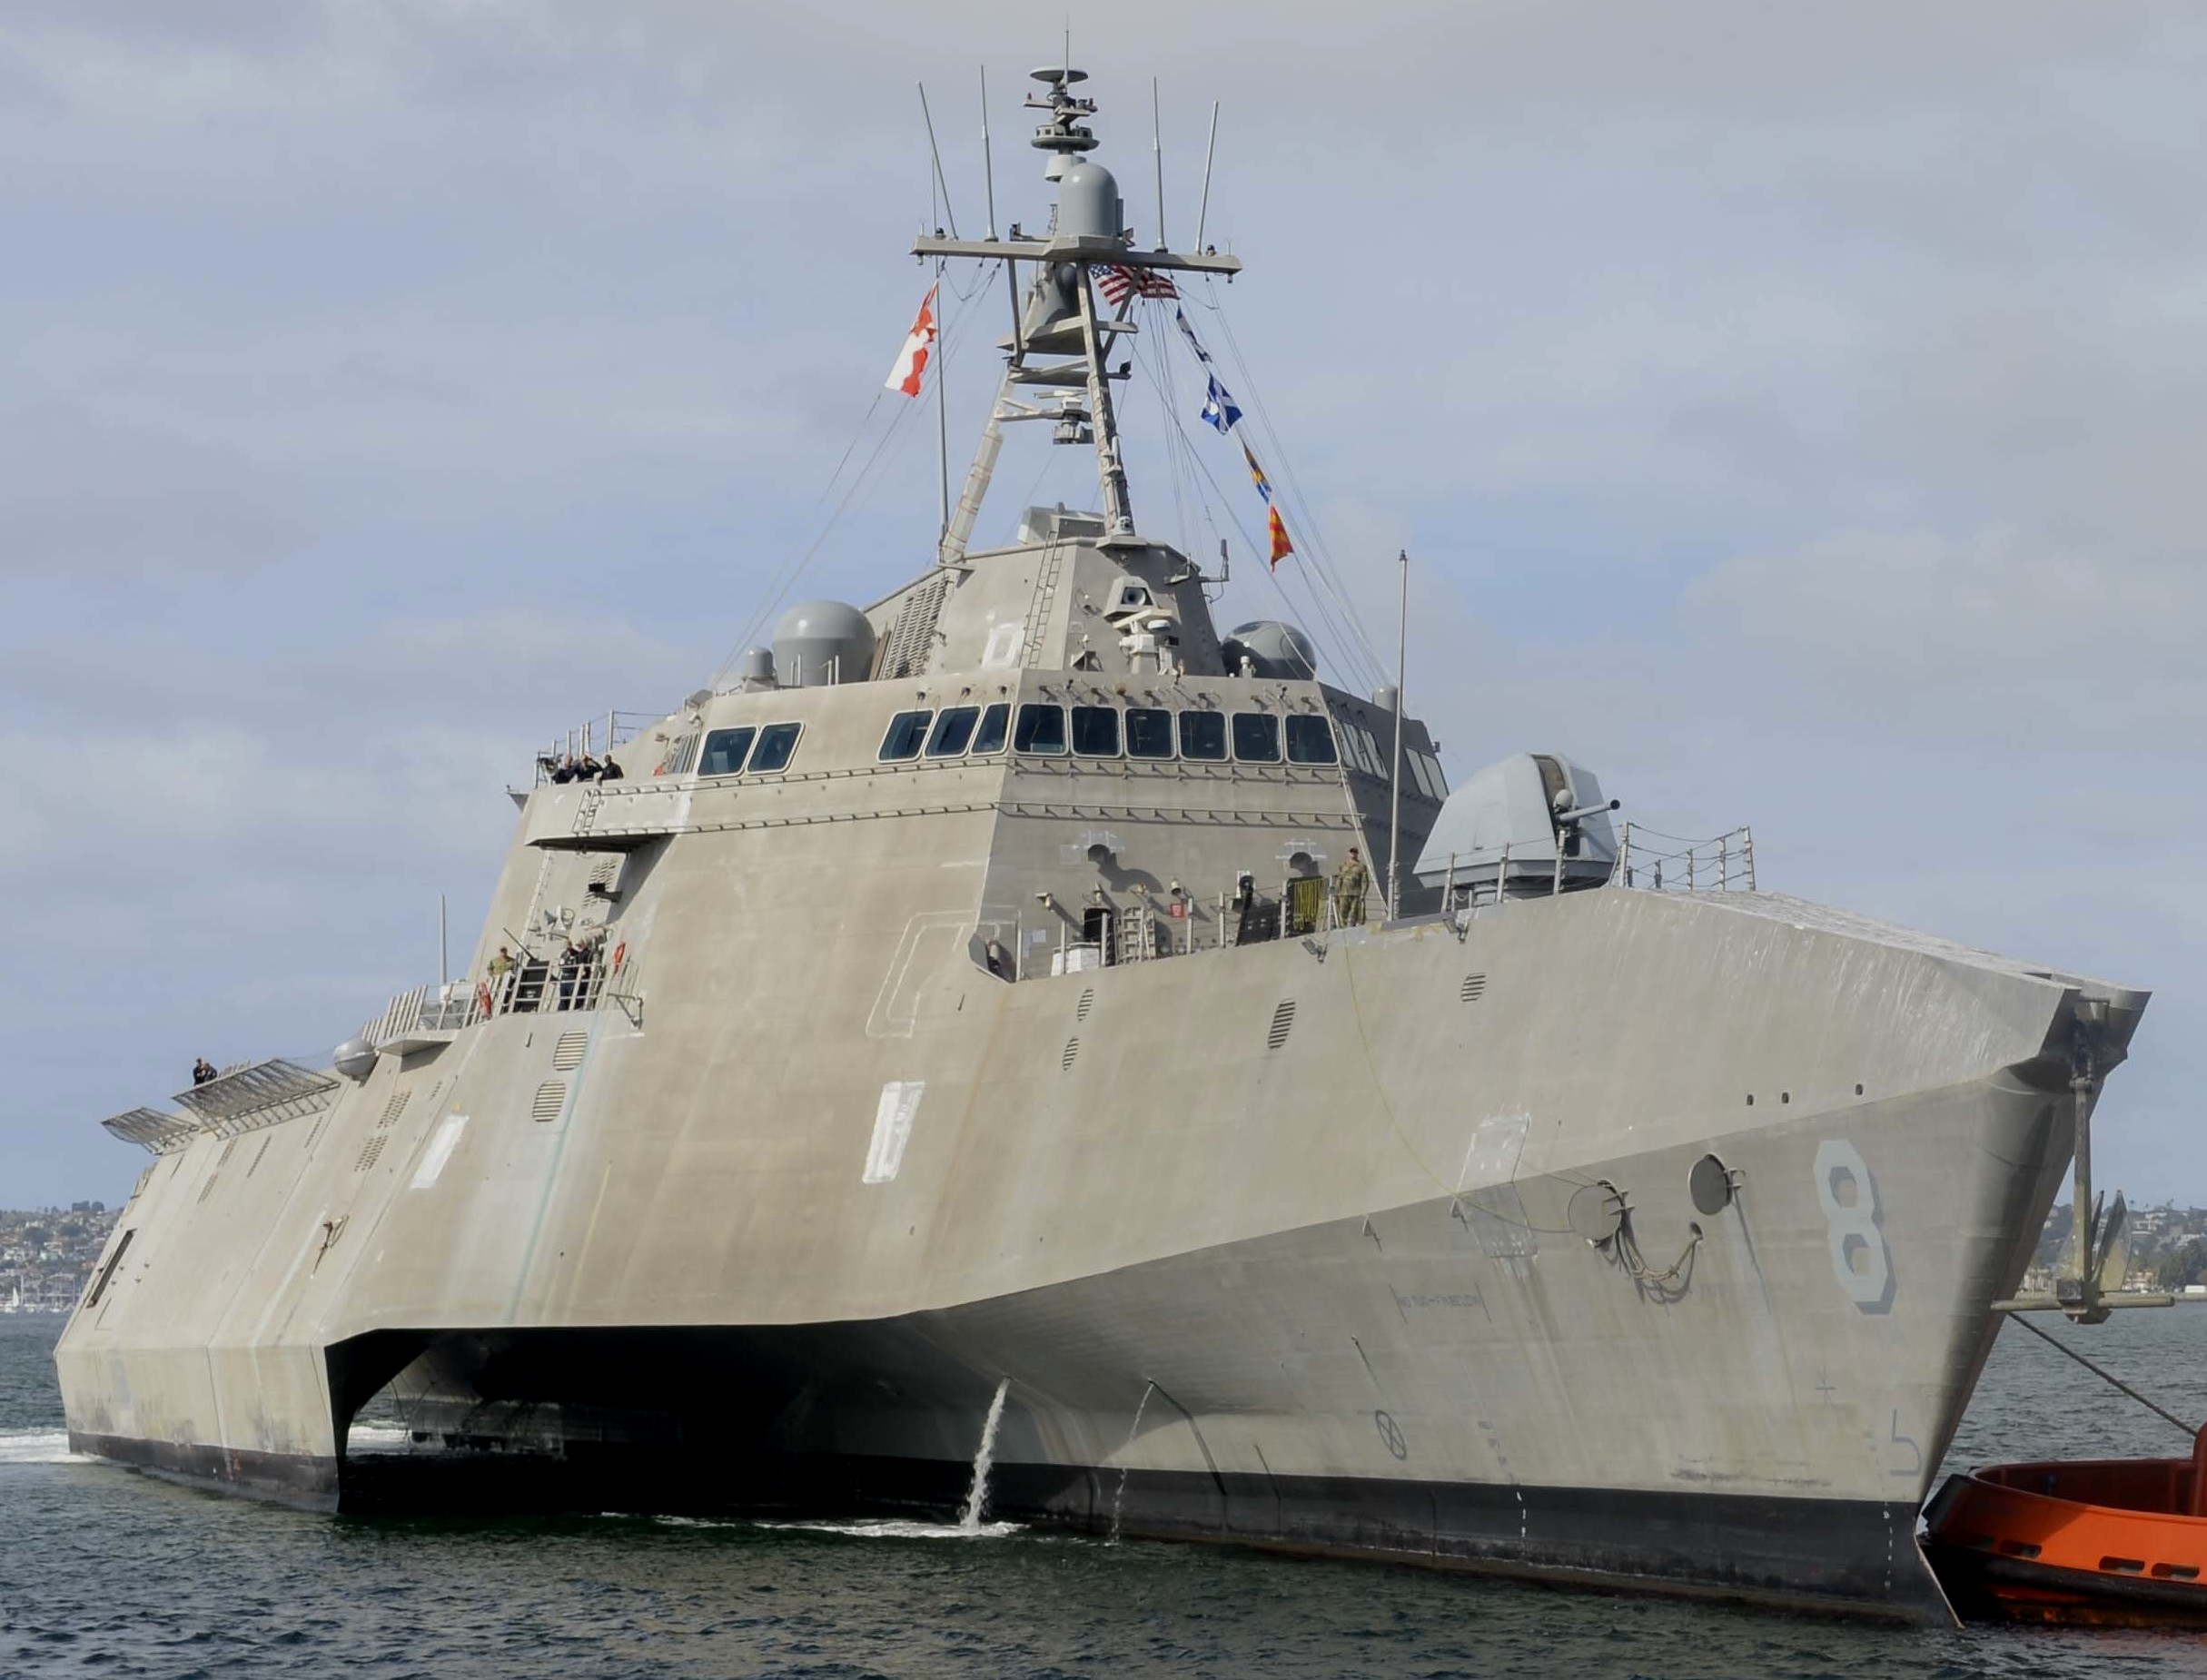 lcs-8 uss montgomery independence class littoral combat ship us navy san diego fleet week 2022 68